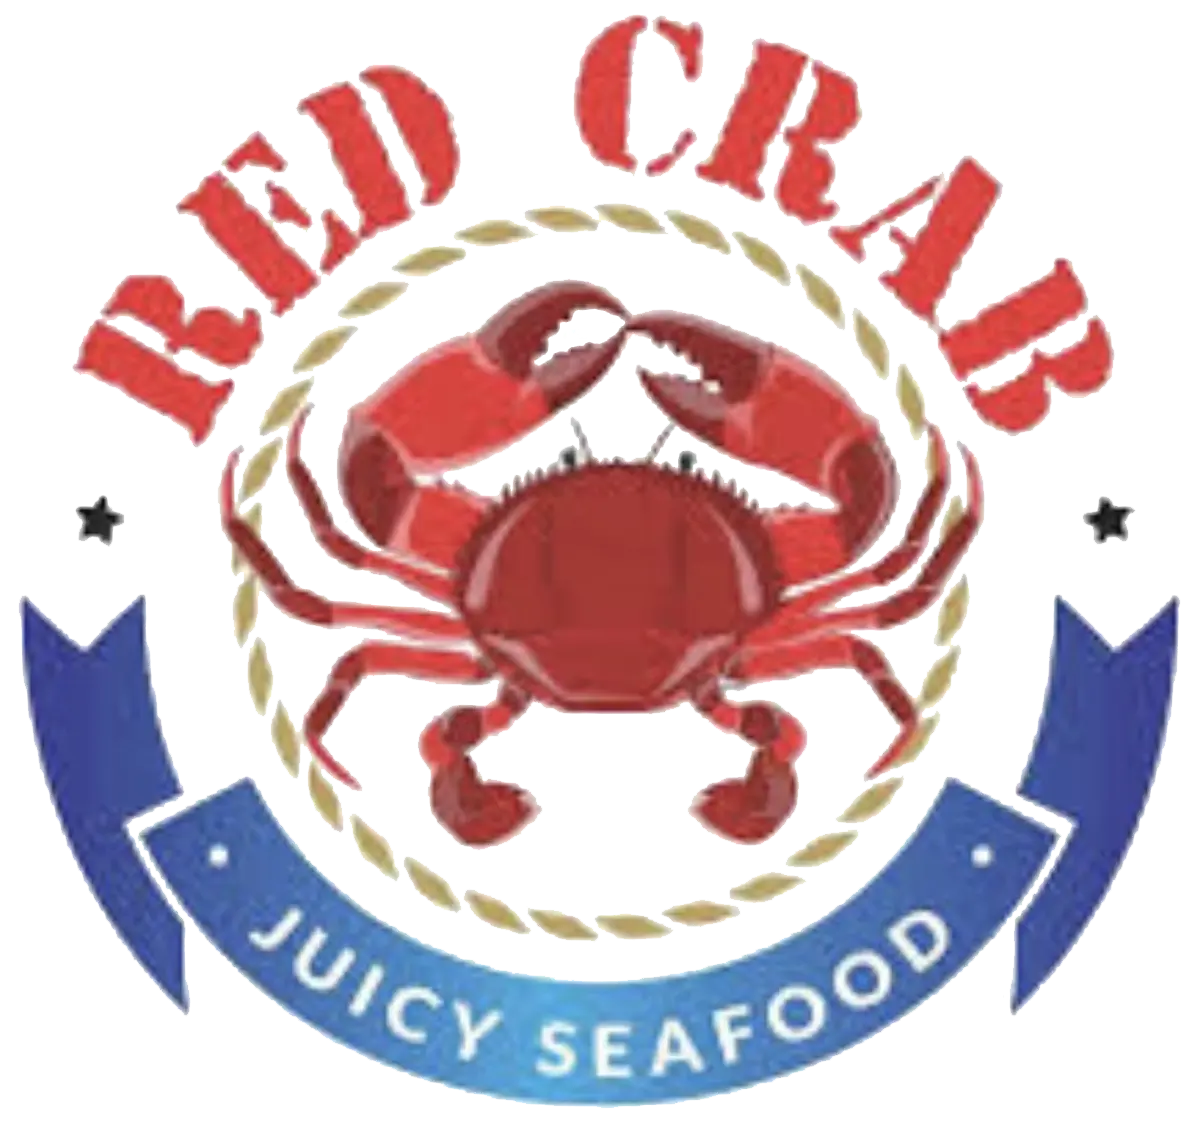 Red Crab Juicy Seafood & Bar